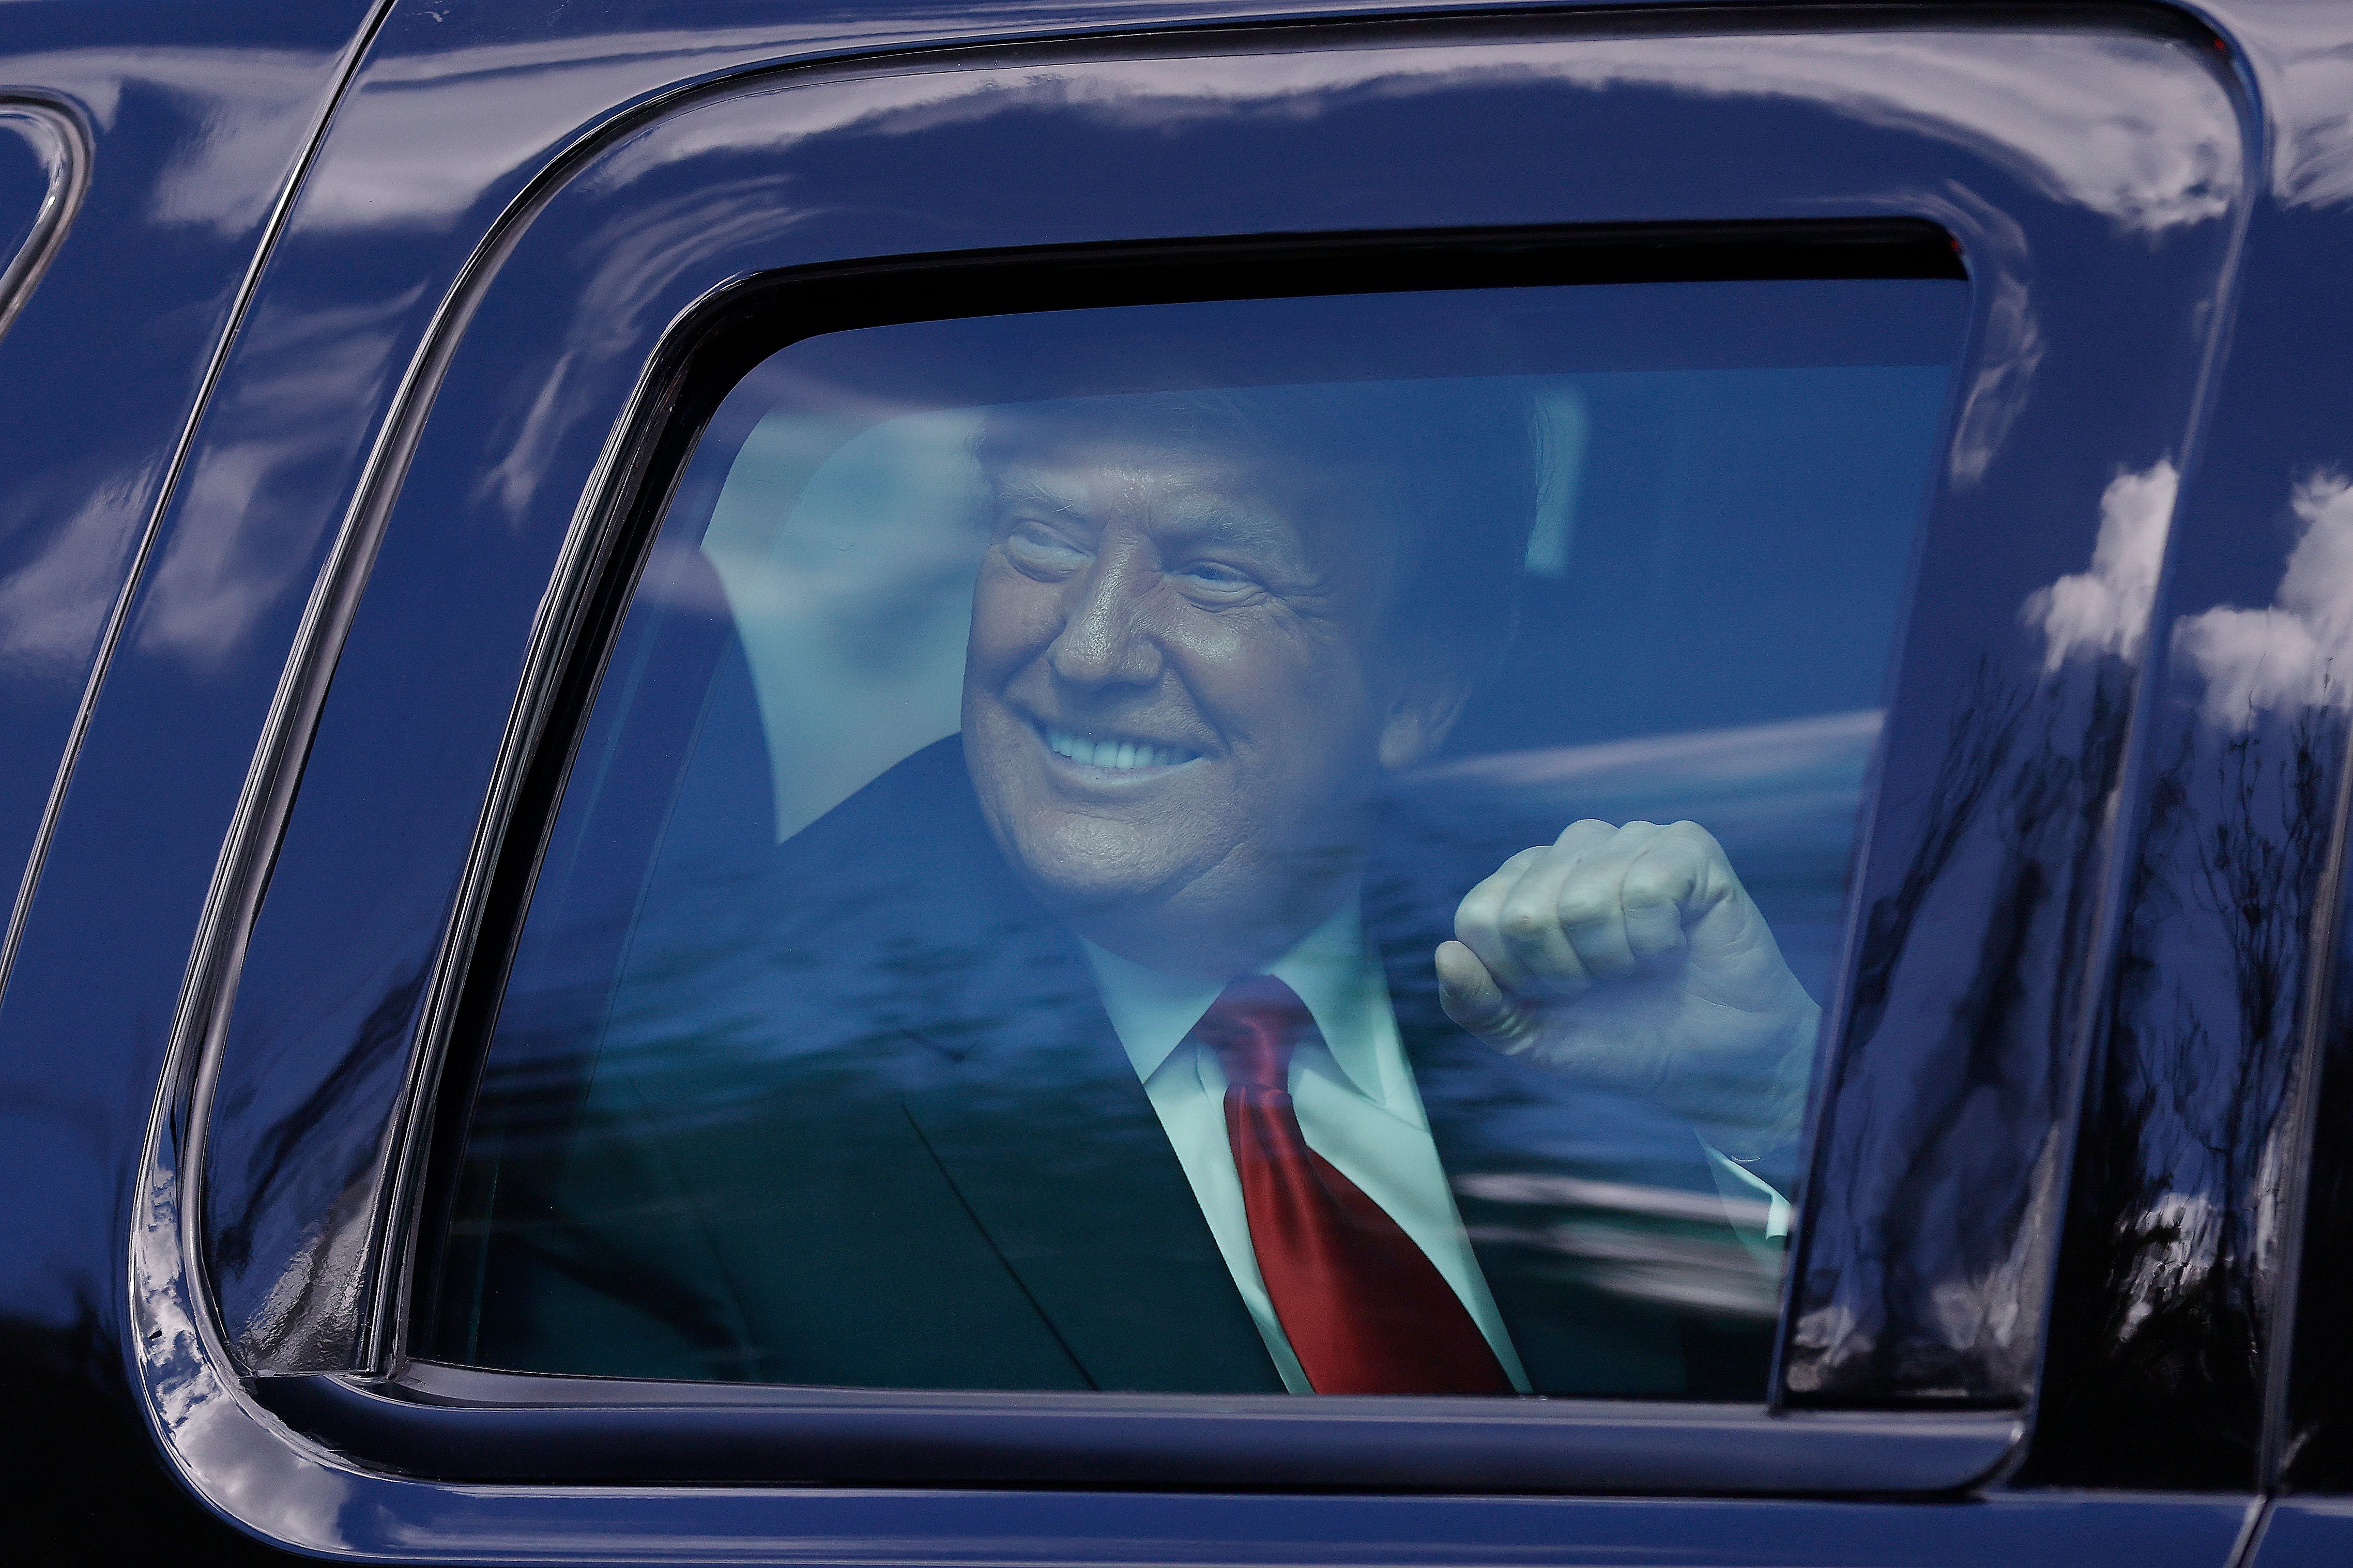 Donald Trump travels to Mar-a-Lago on Joe Biden's inauguration day